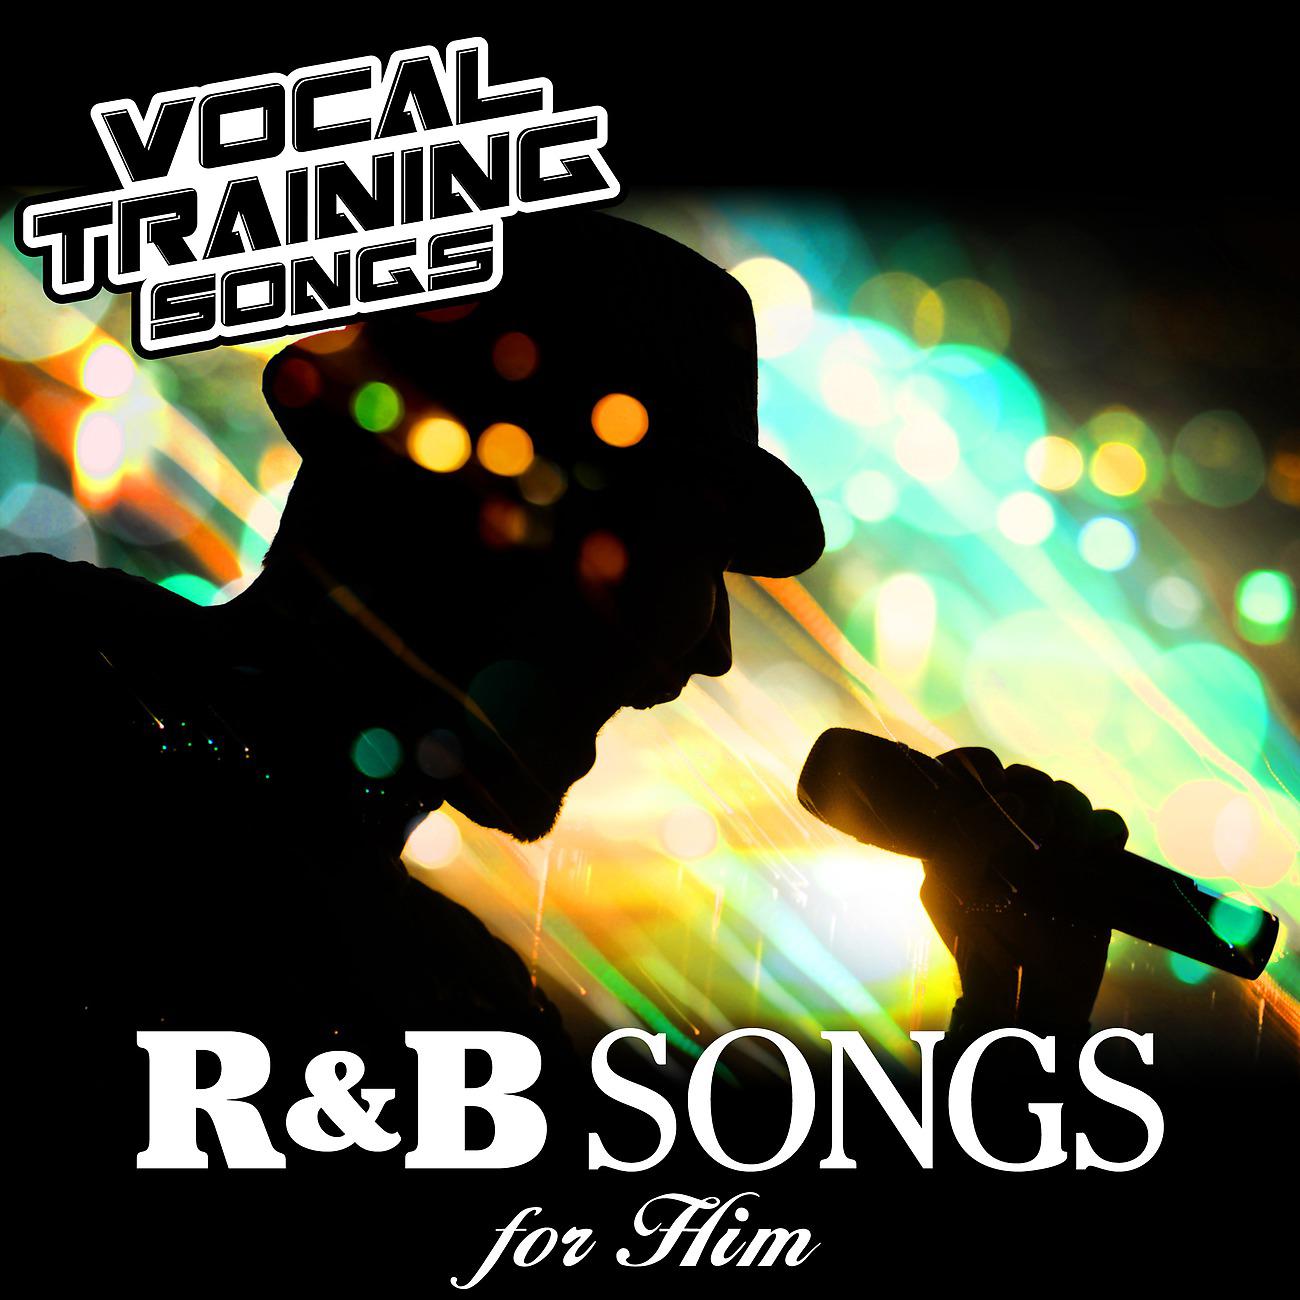 Постер альбома R&B Songs for Him - Vocal Training Songs